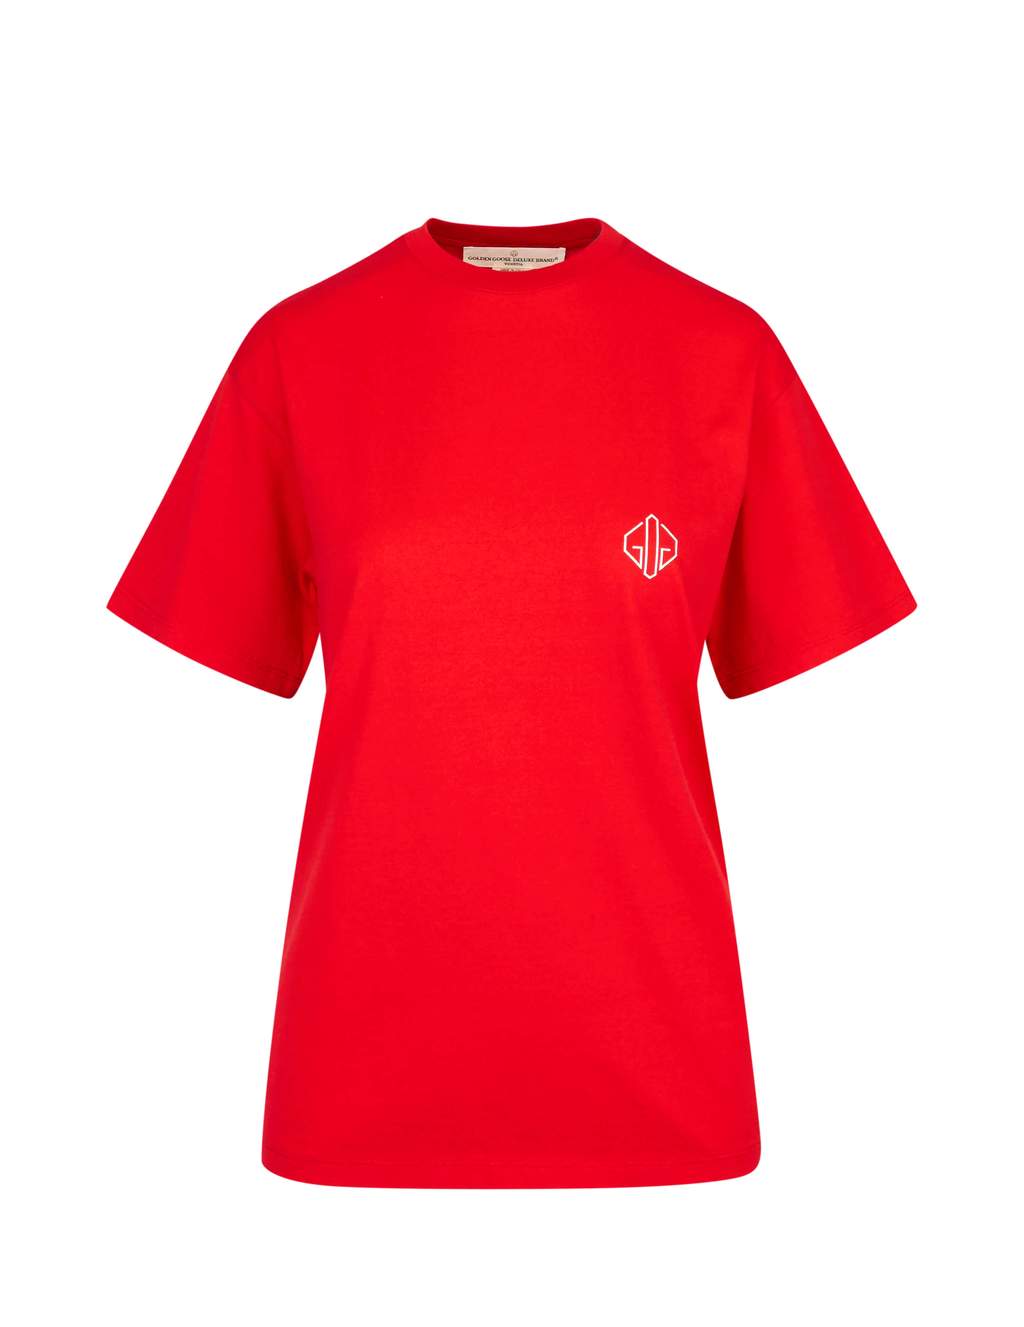 Goose Clothing Logo - Golden Goose Deluxe Brand Women's Red Logo T-Shirt | GIULIOFASHION ...